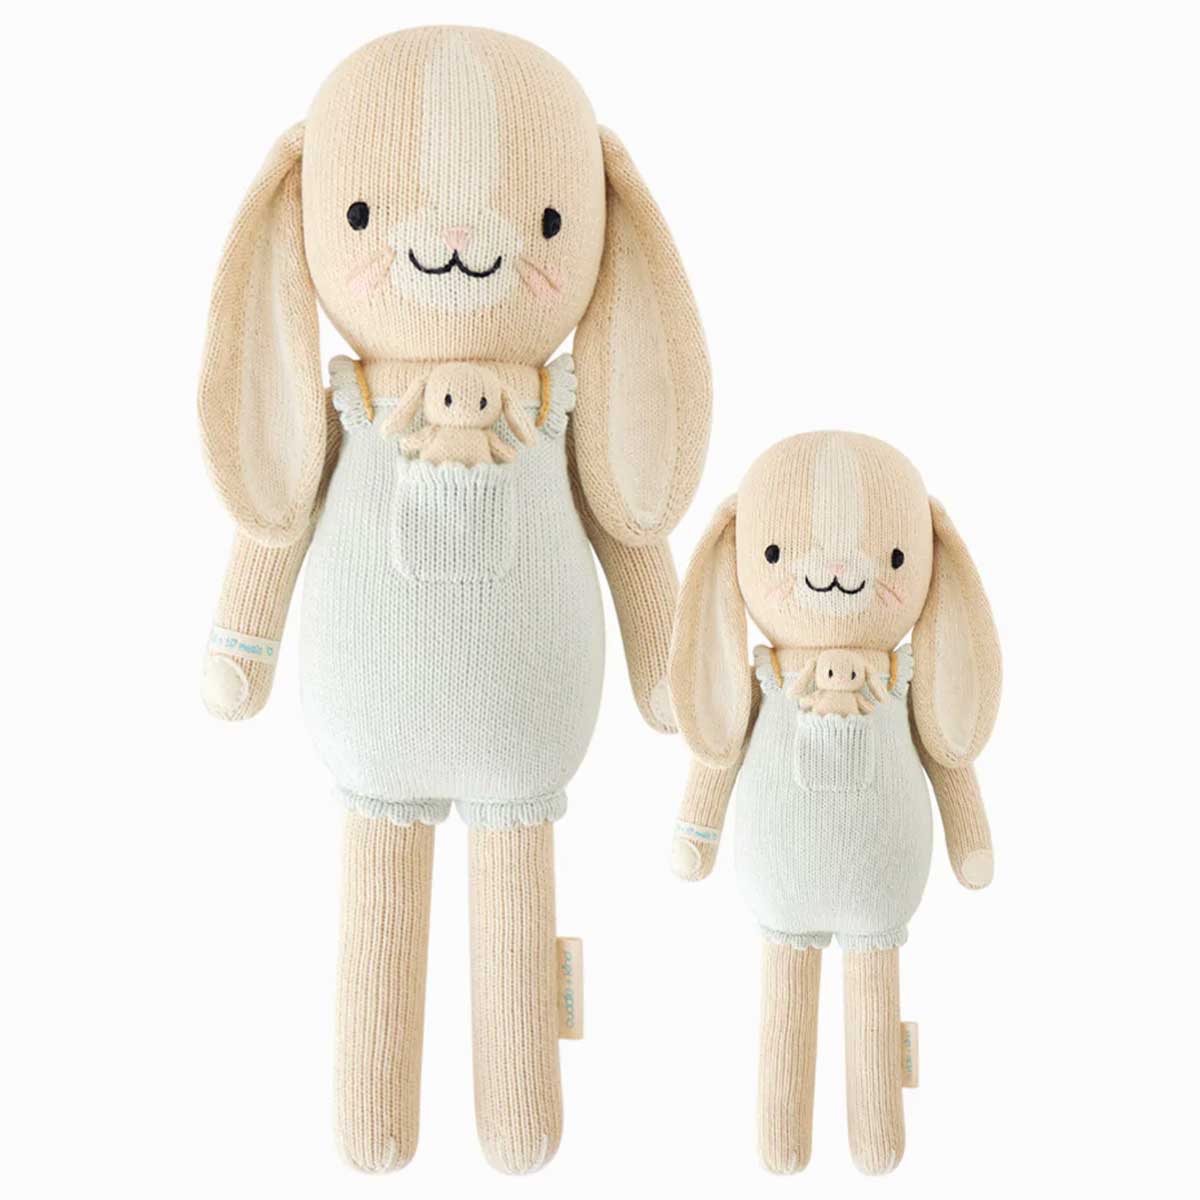 cuddle + kind Hand-Knit Doll - Briar the Bunny